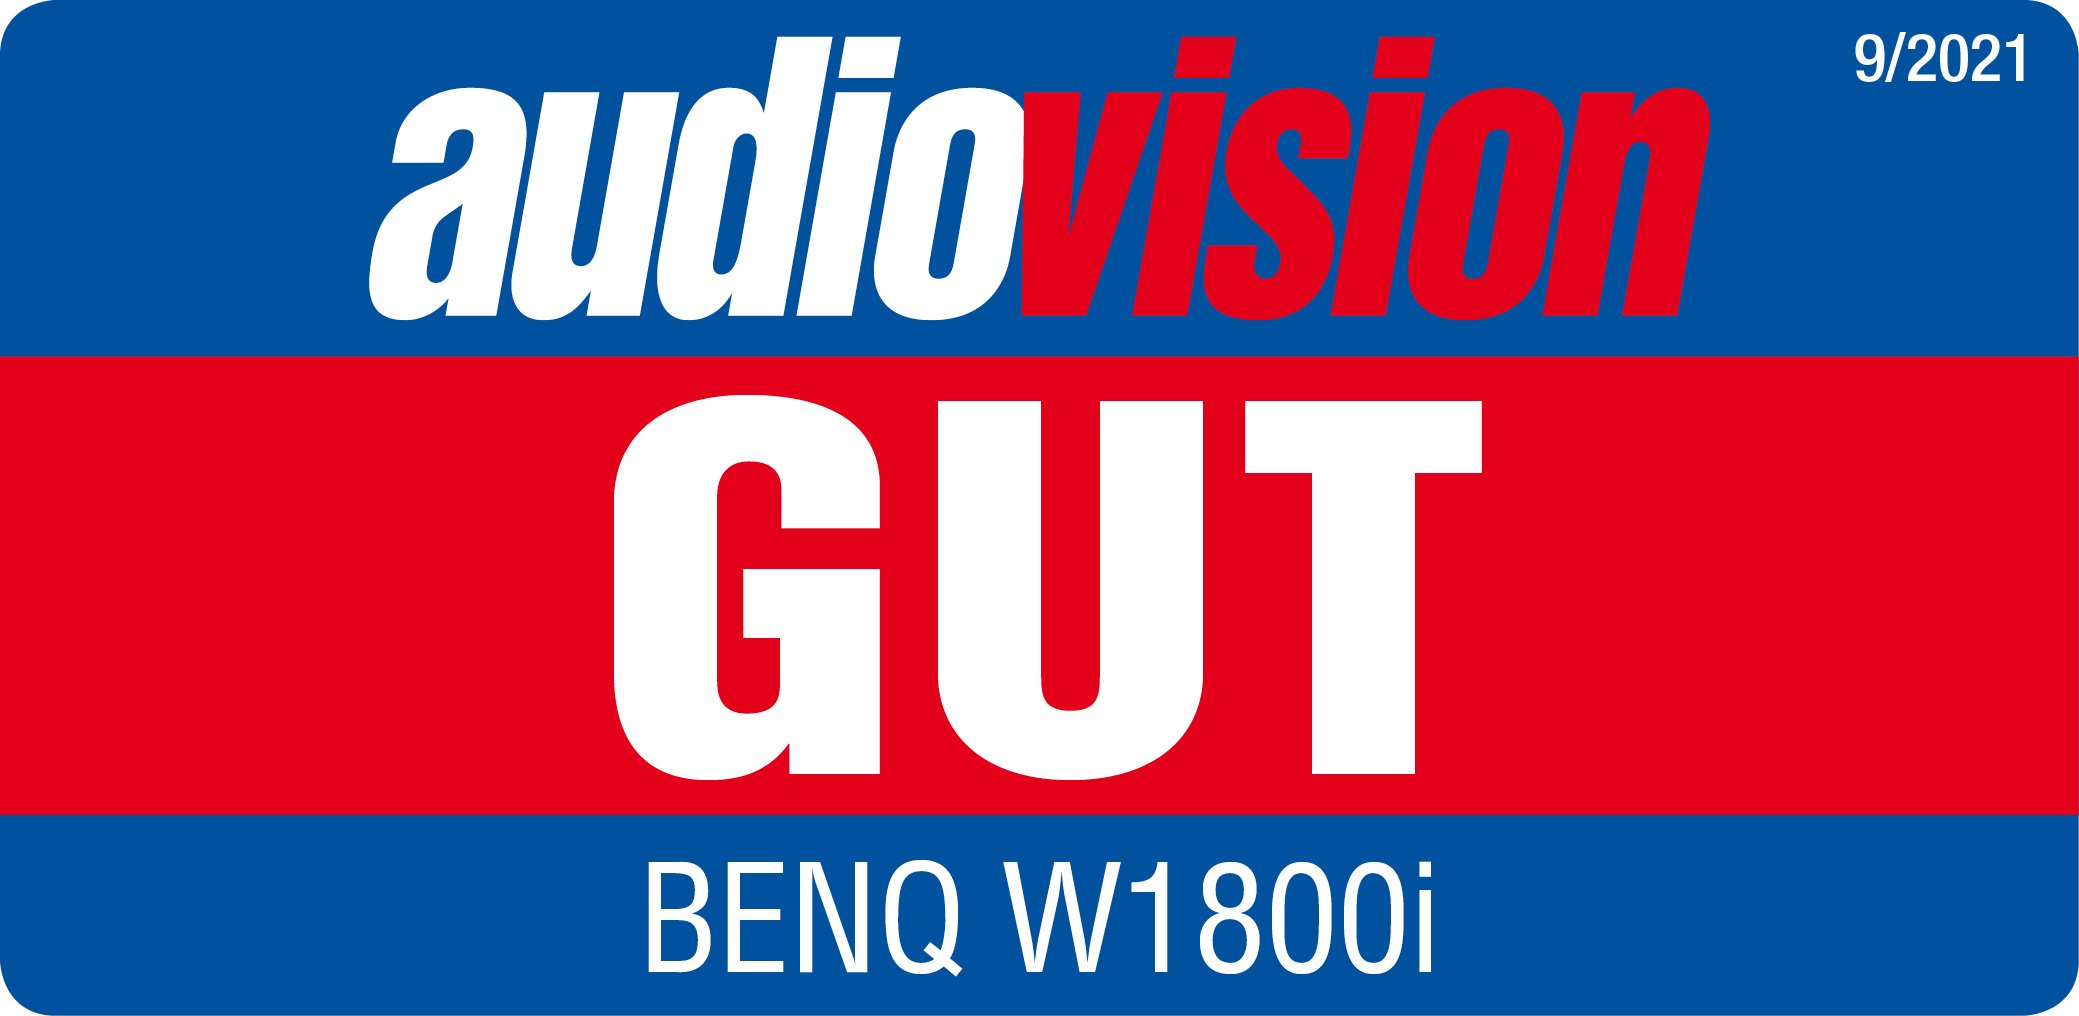 W1800i audiovision 4k beamer heimkino